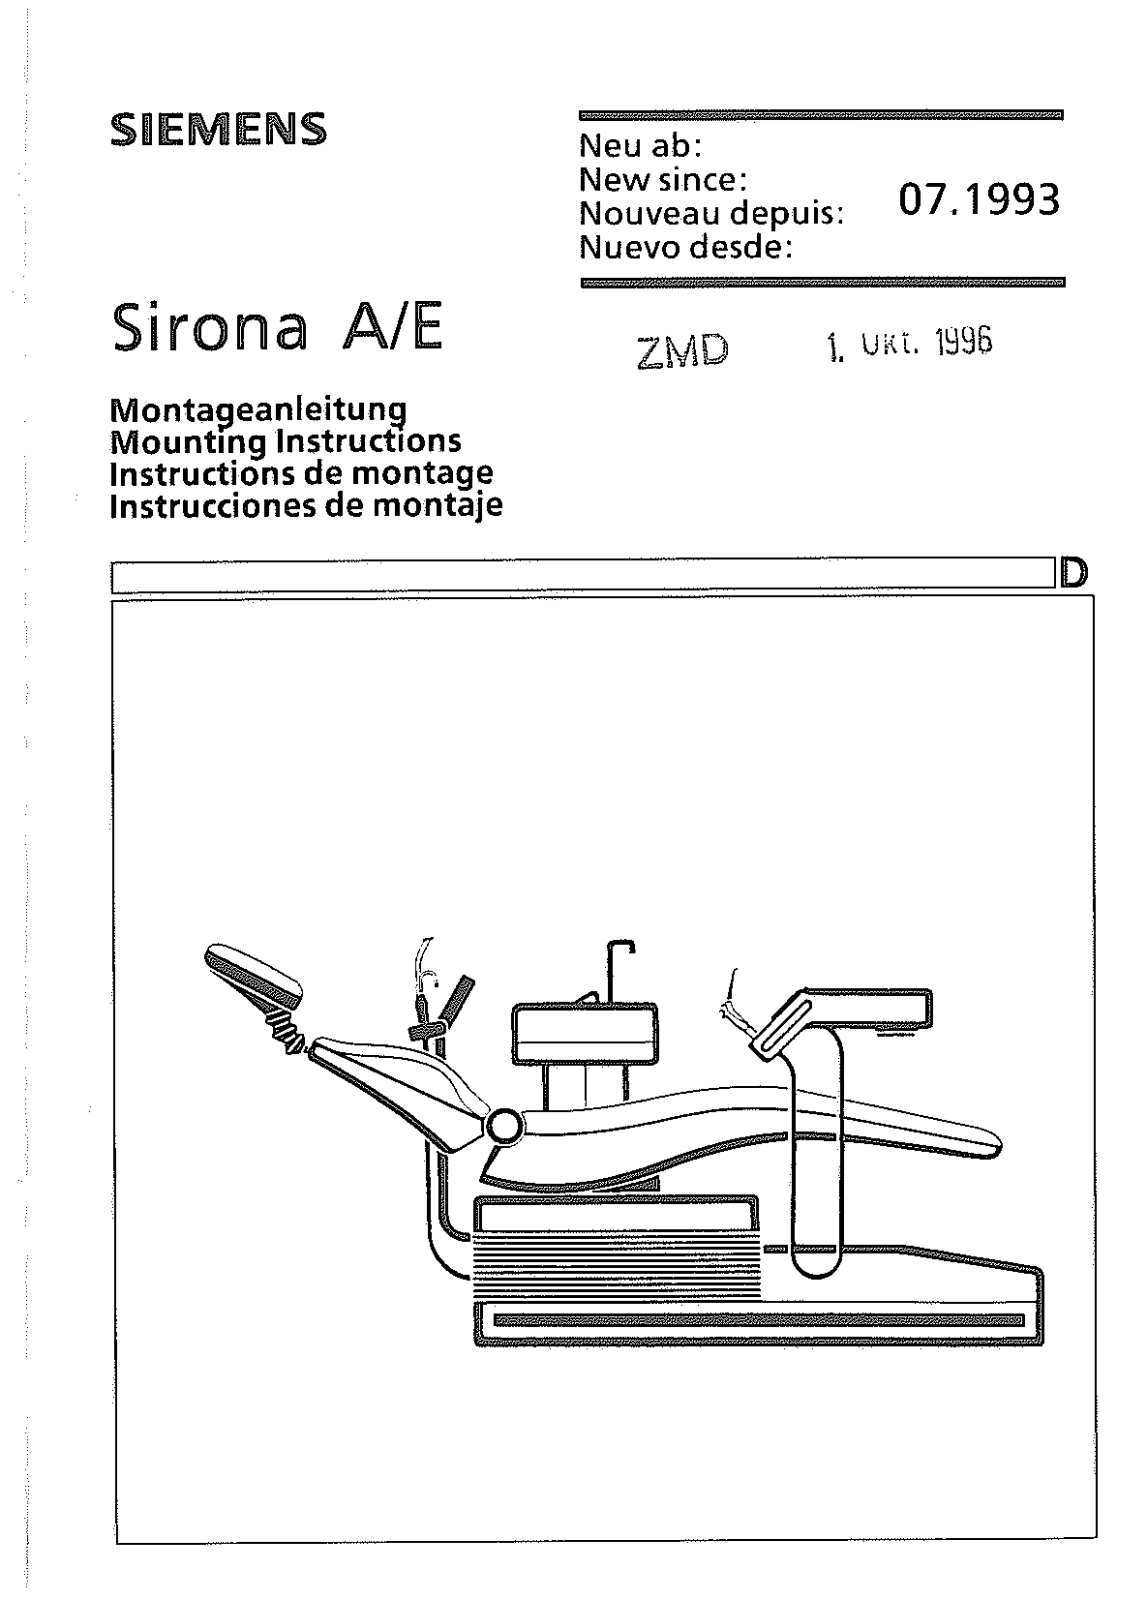 Siemens Sirona A-E Installation instruction